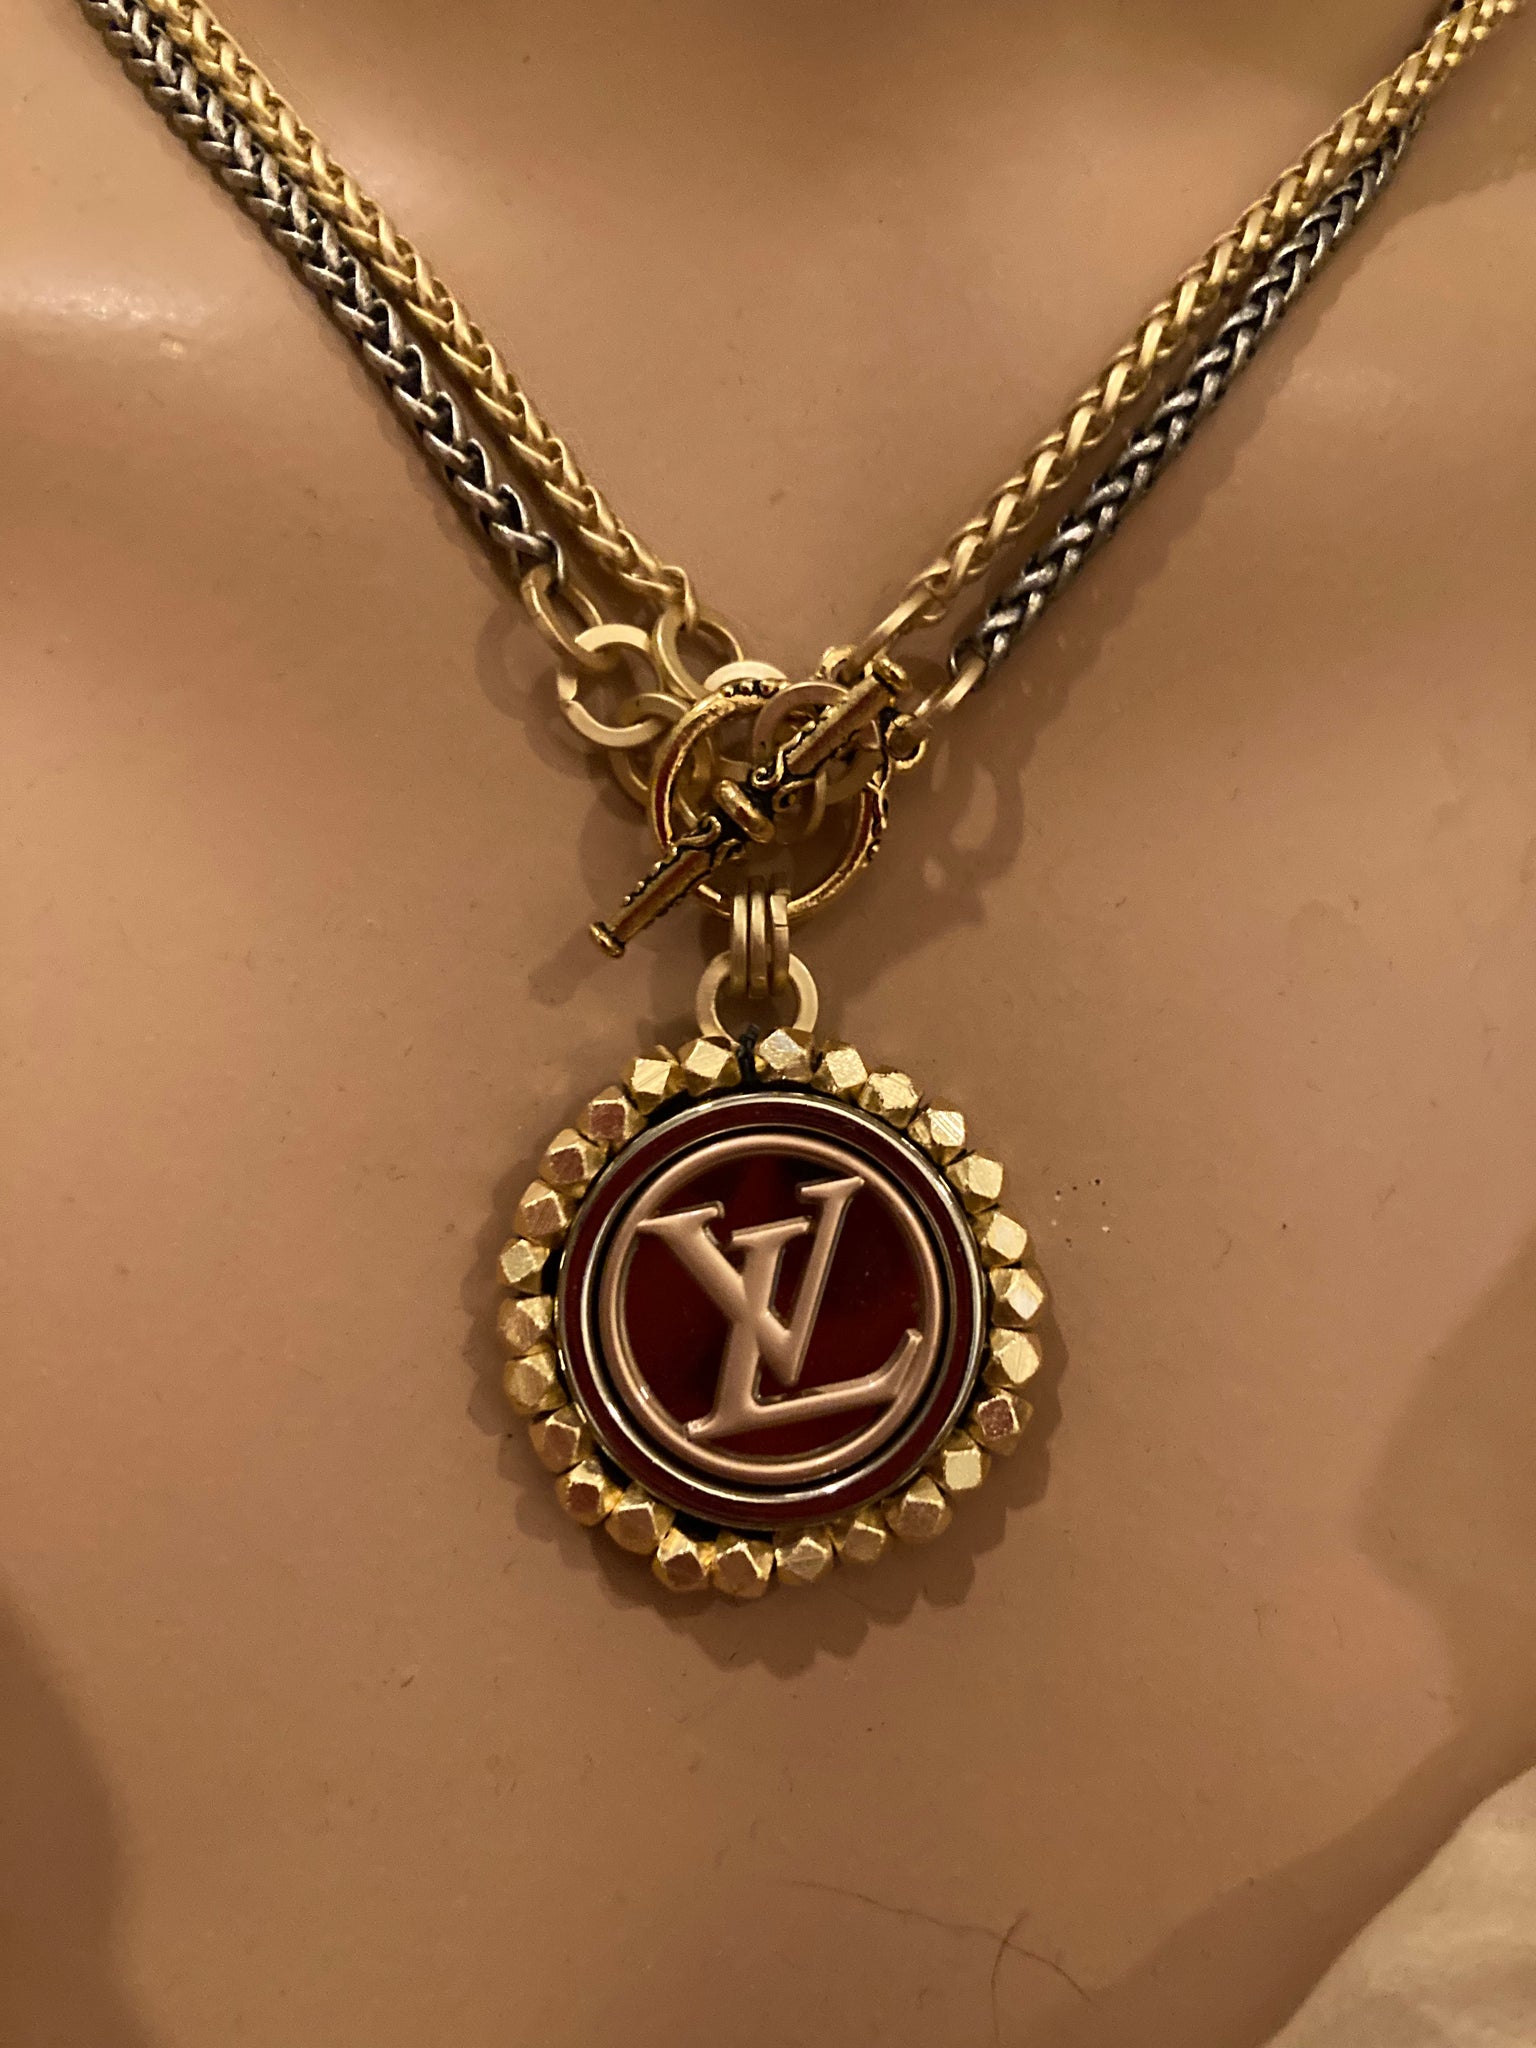 1” Louis Vuitton Button Necklace - Long or Short (Only 1 Left